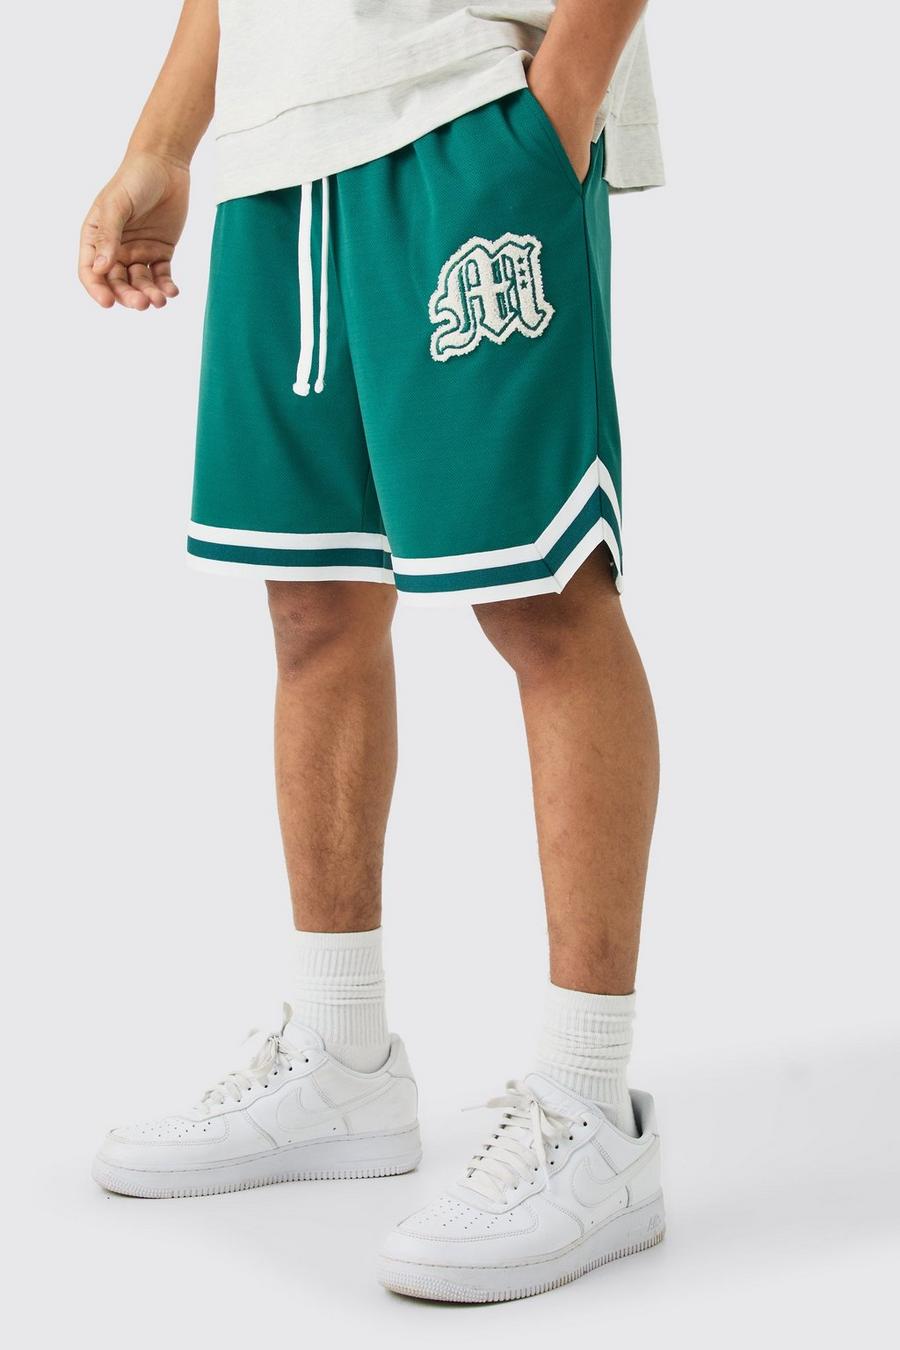 Pantalón corto holgado estilo baloncesto de malla con aplique M, Green